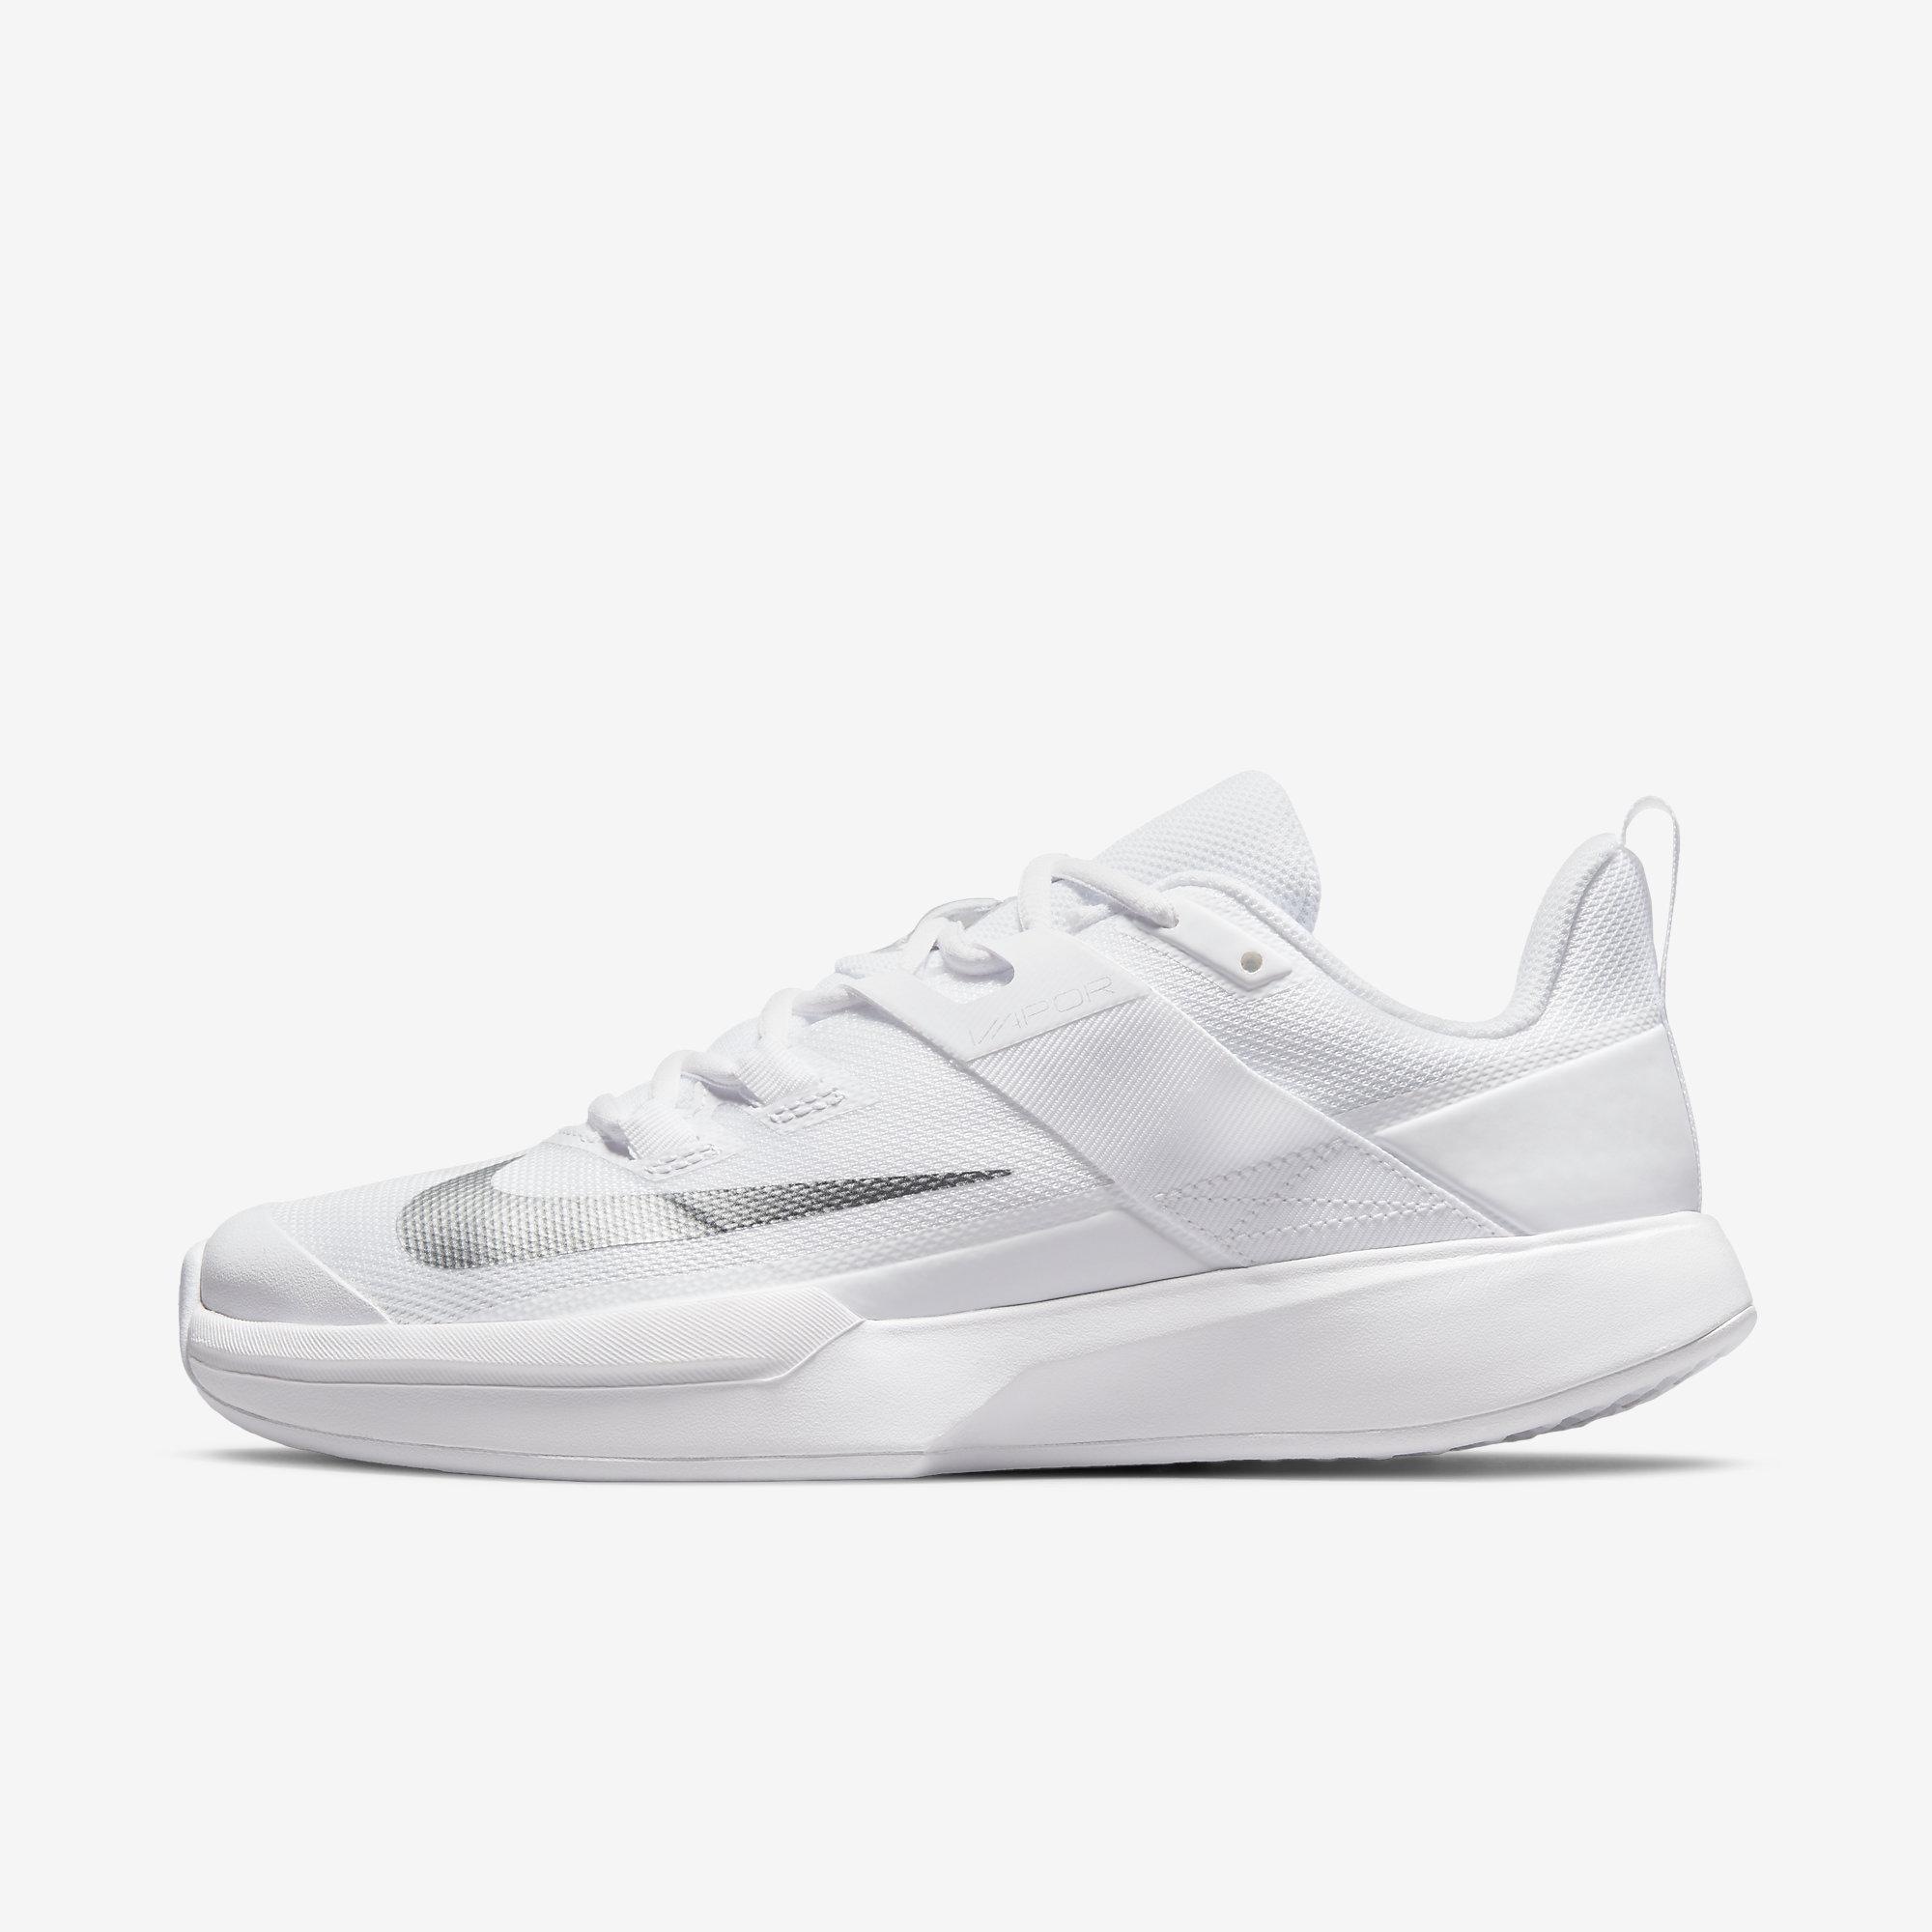 Nike Womens Vapor Lite Tennis Shoes - White/Silver - Tennisnuts.com